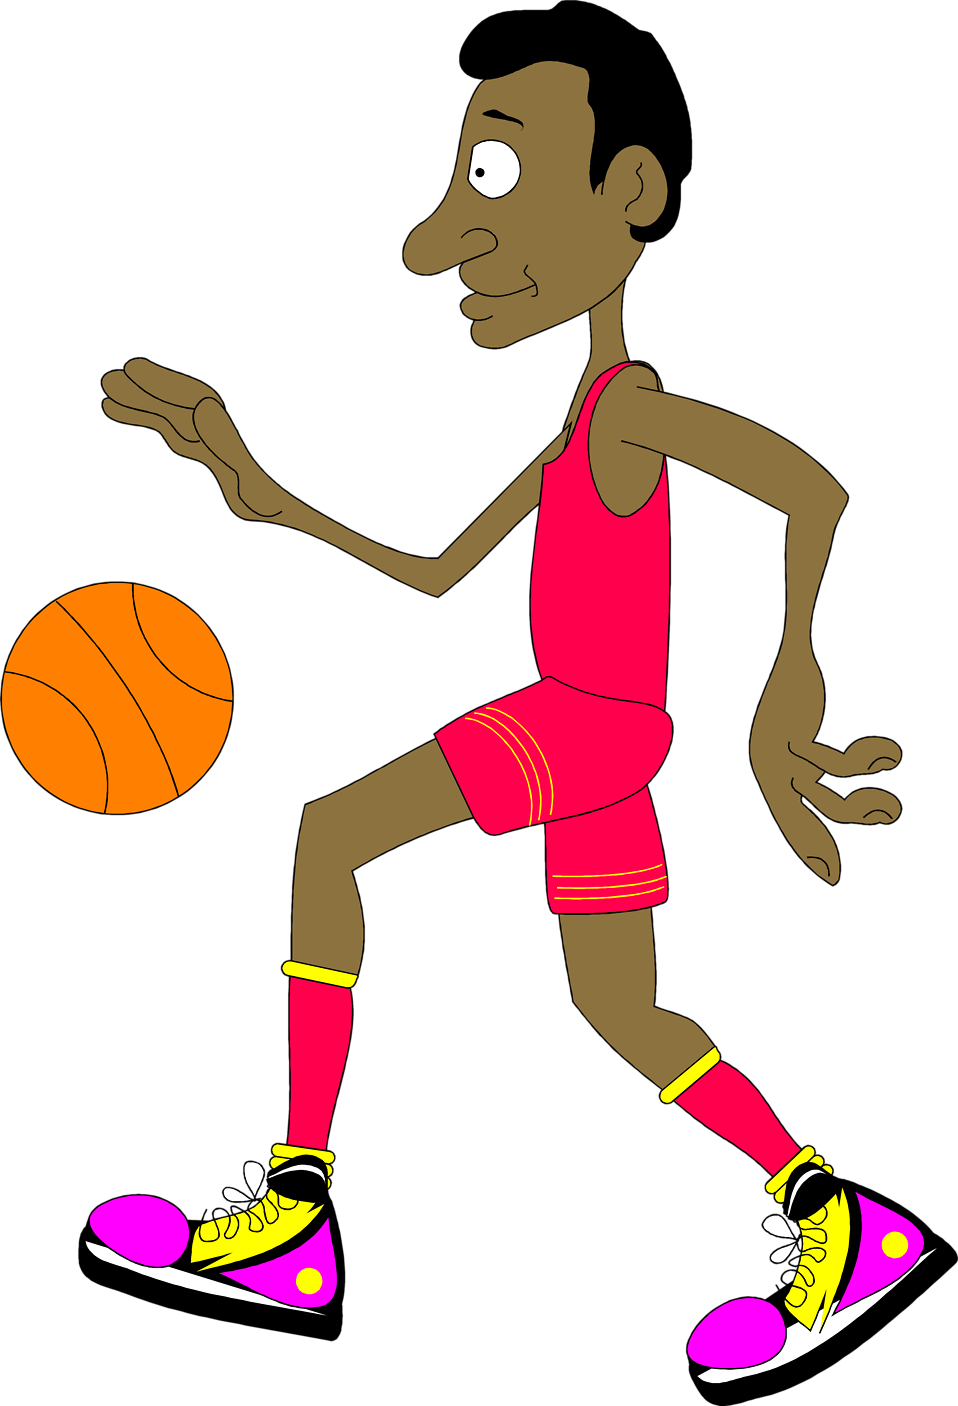 Basketball | Free Stock Photo | Illustration of a basketball player